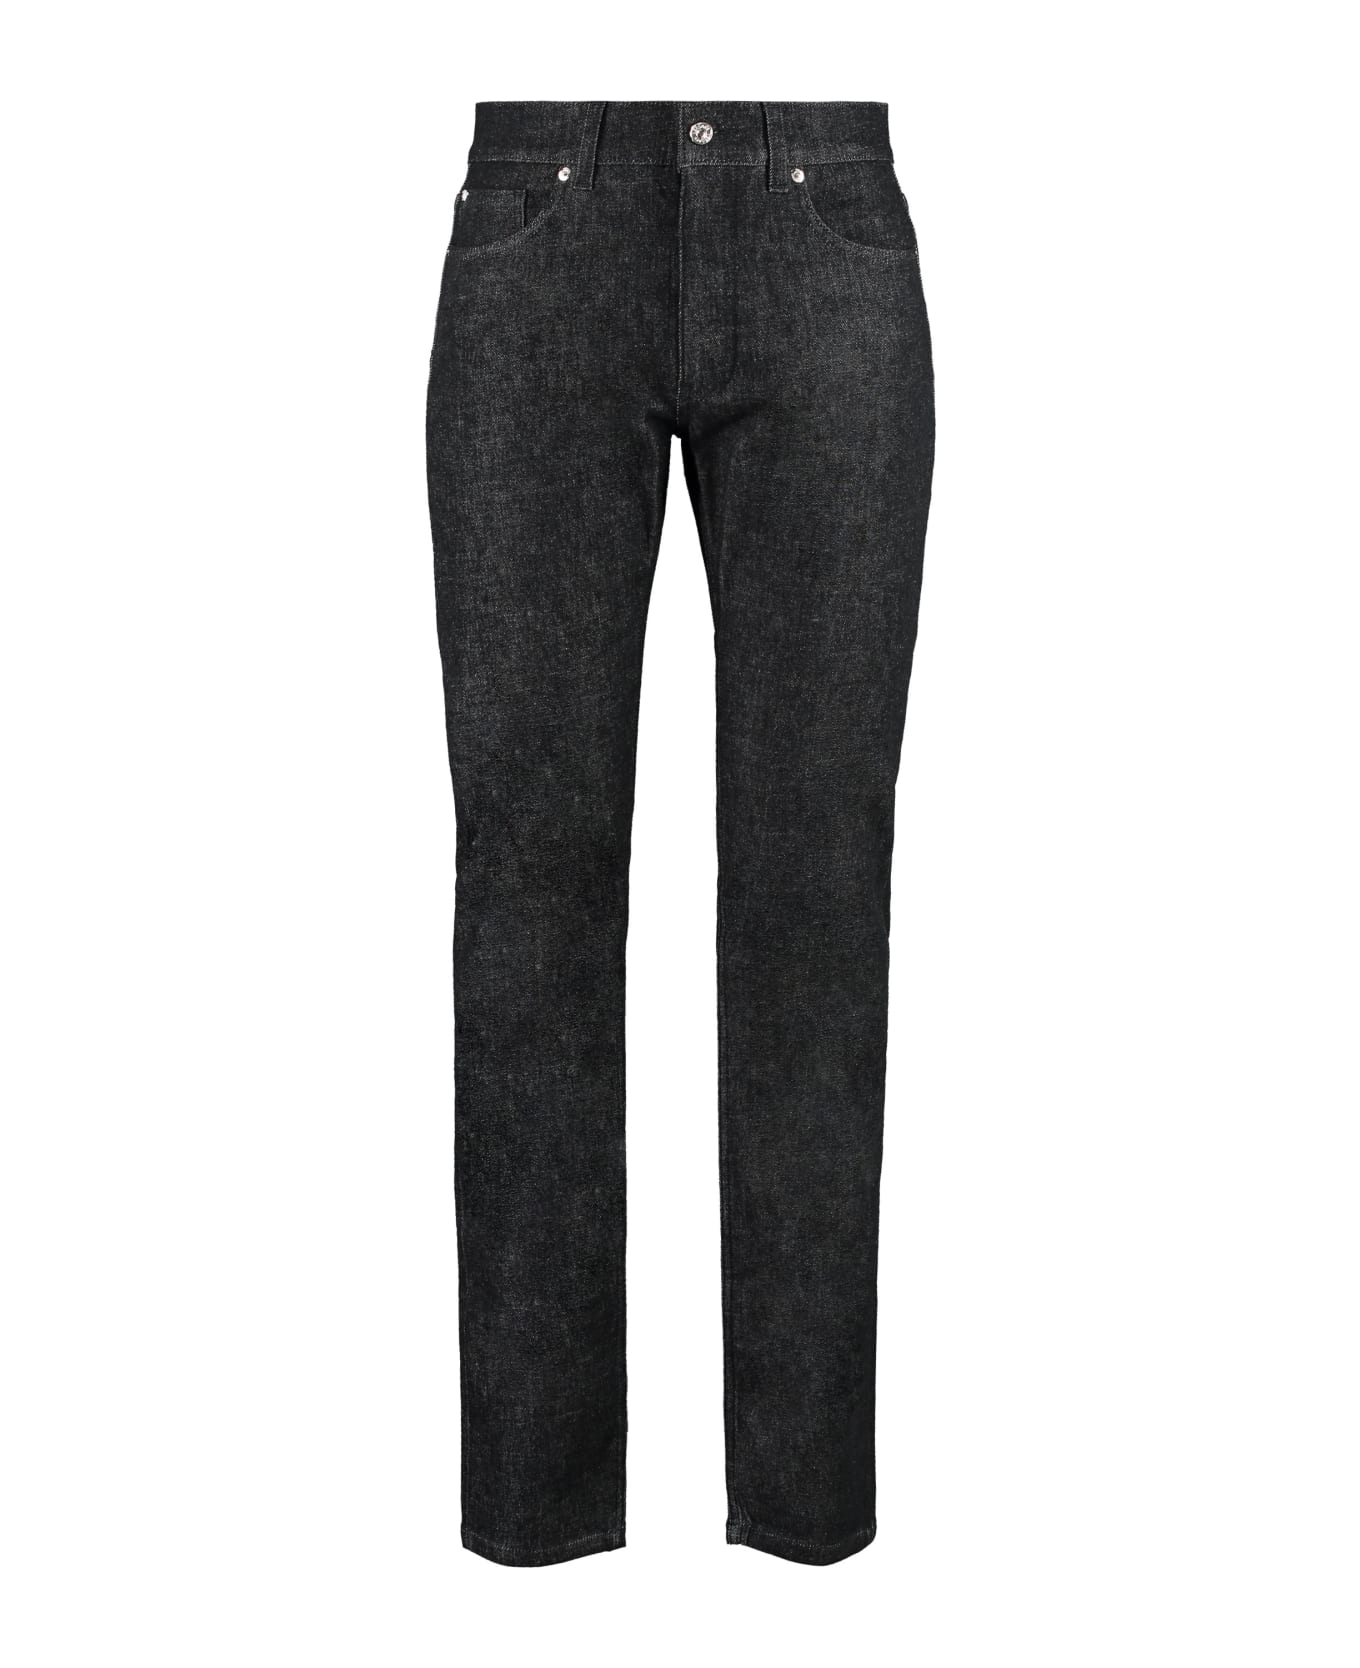 Versace 5-pocket Slim Fit Jeans - black デニム